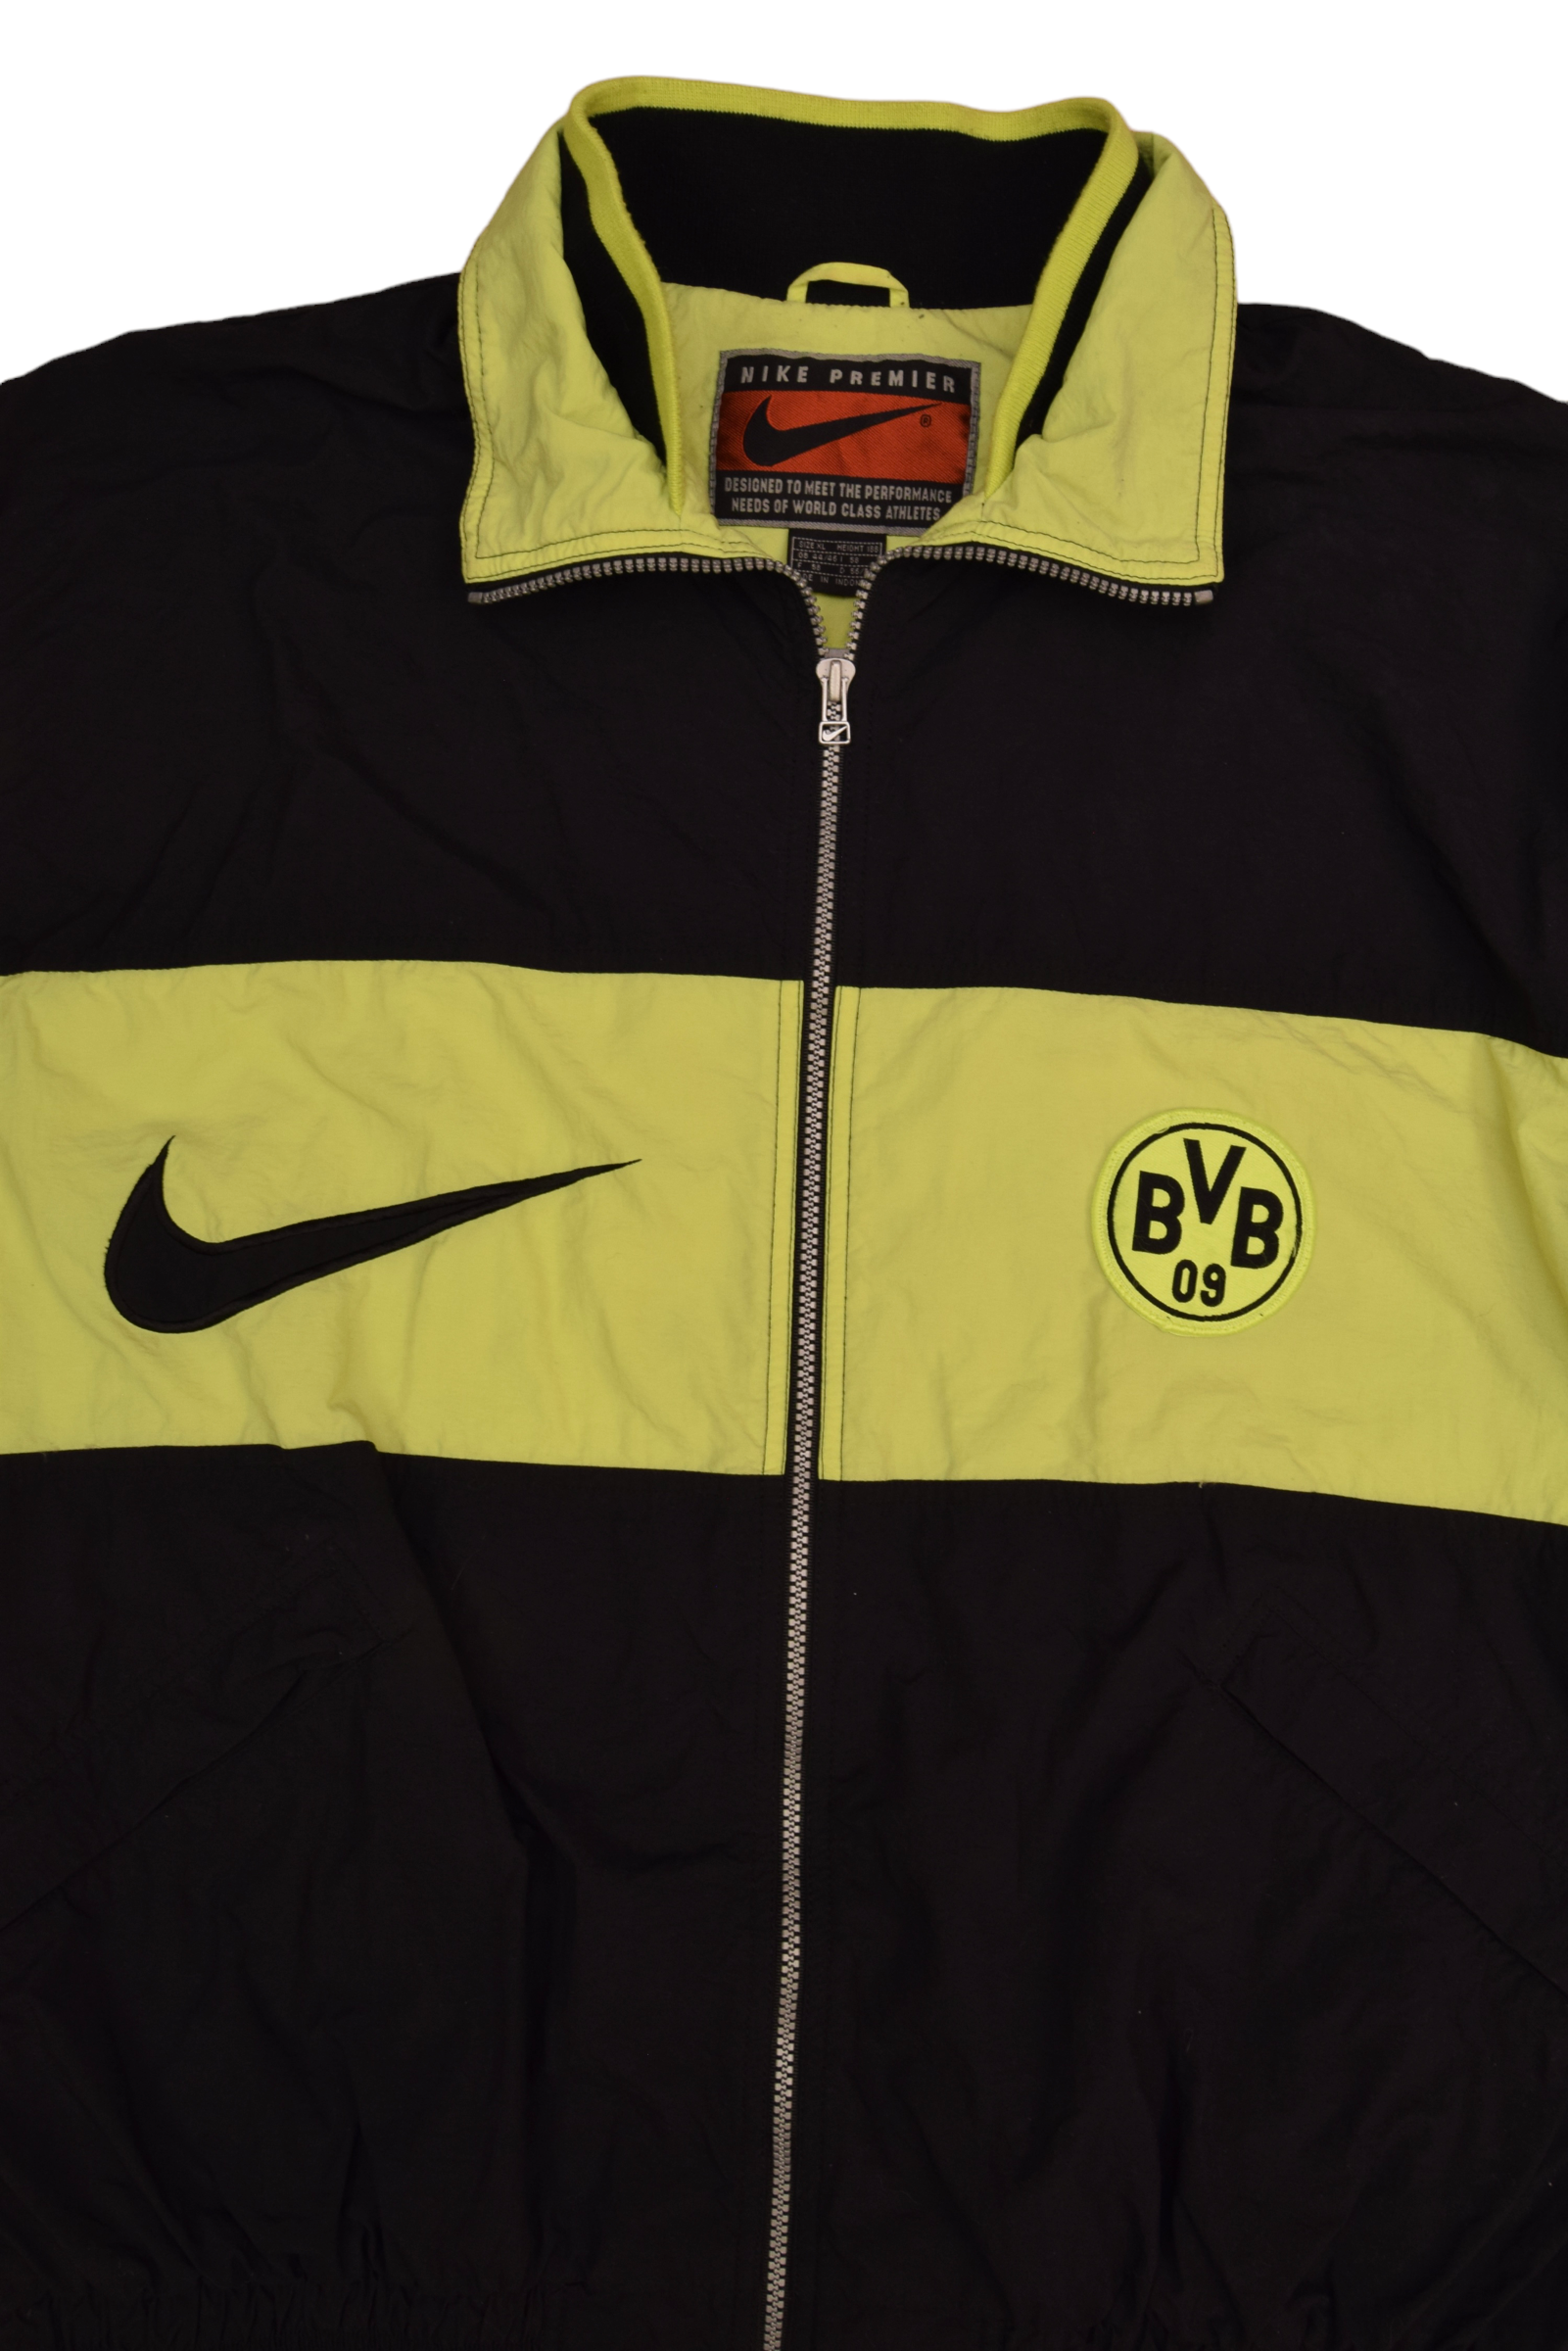 Vintage BVB Borussia Dortmund Nike Premier 1995 - 1996 Jacket Size XL Black Neon Yellow